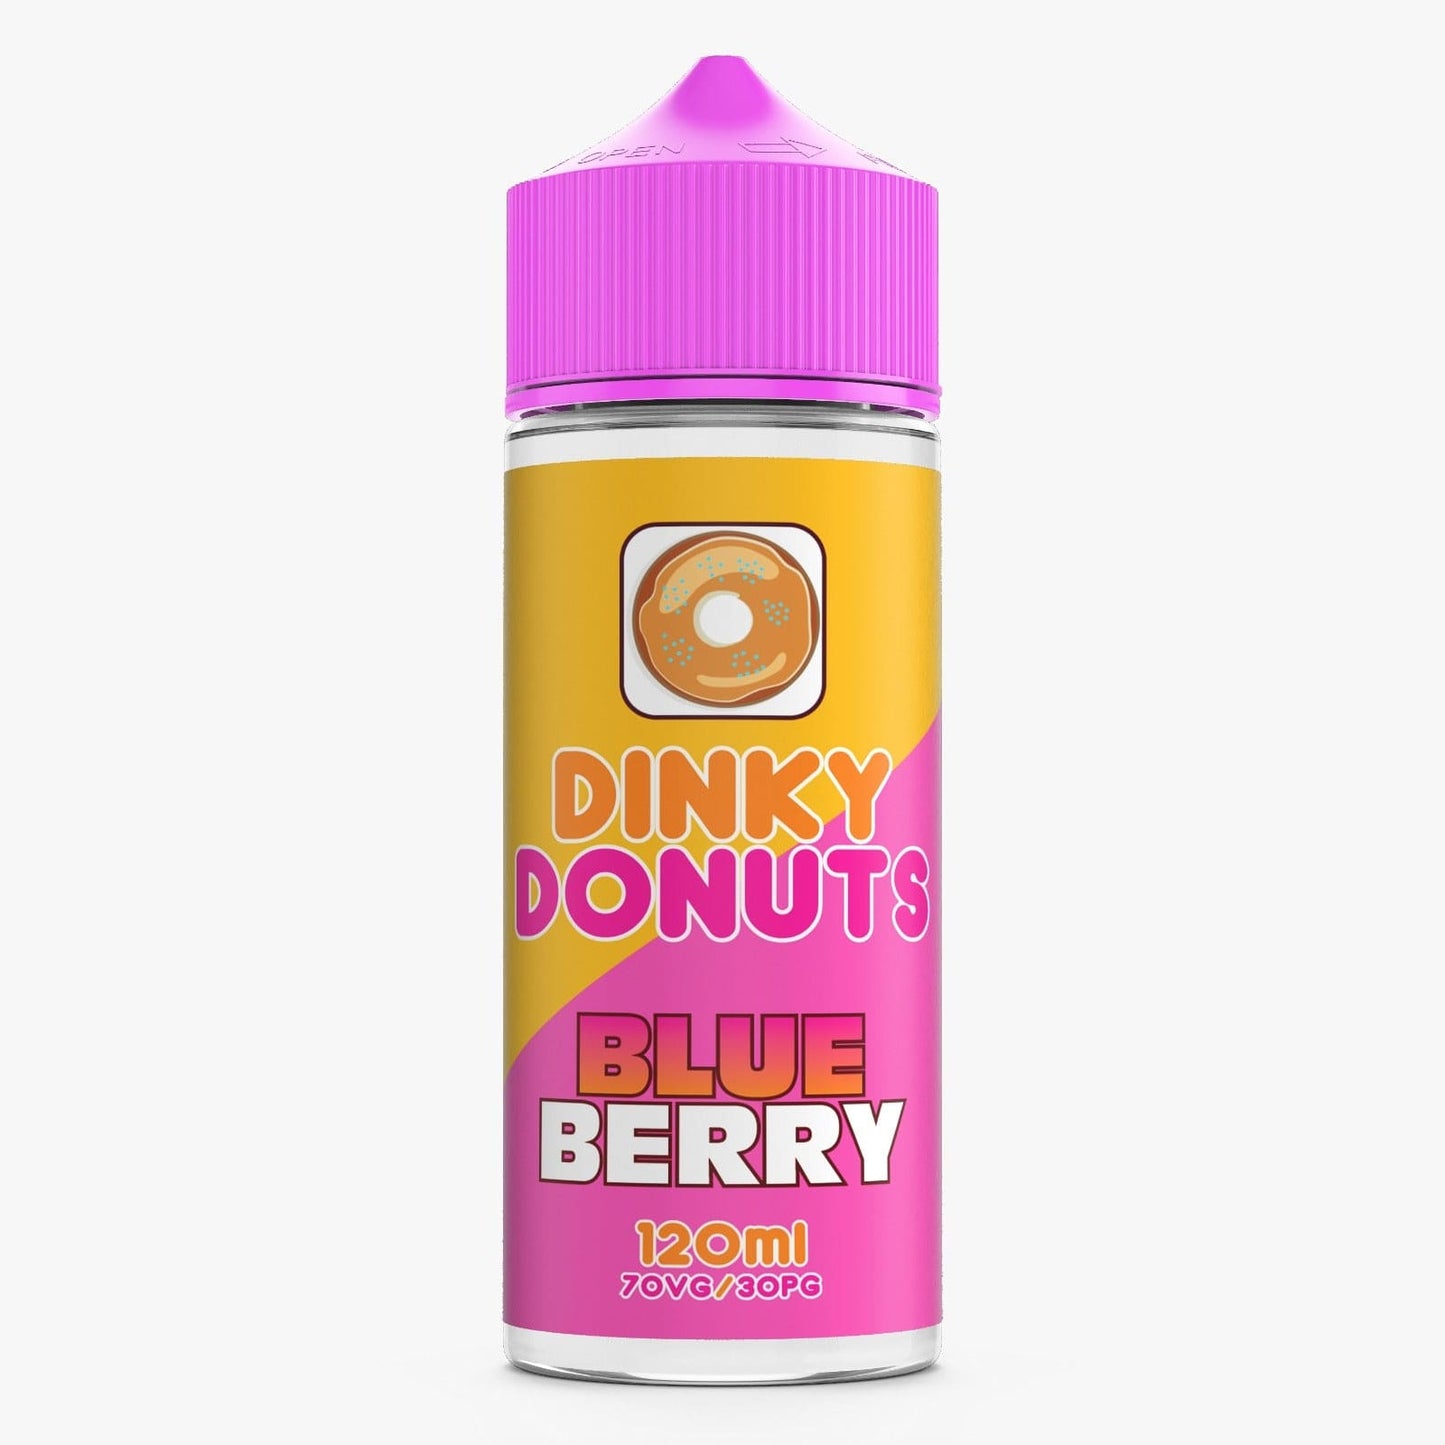 Blueberry by Dinky Donuts 100ml Shortfill E-Liquid